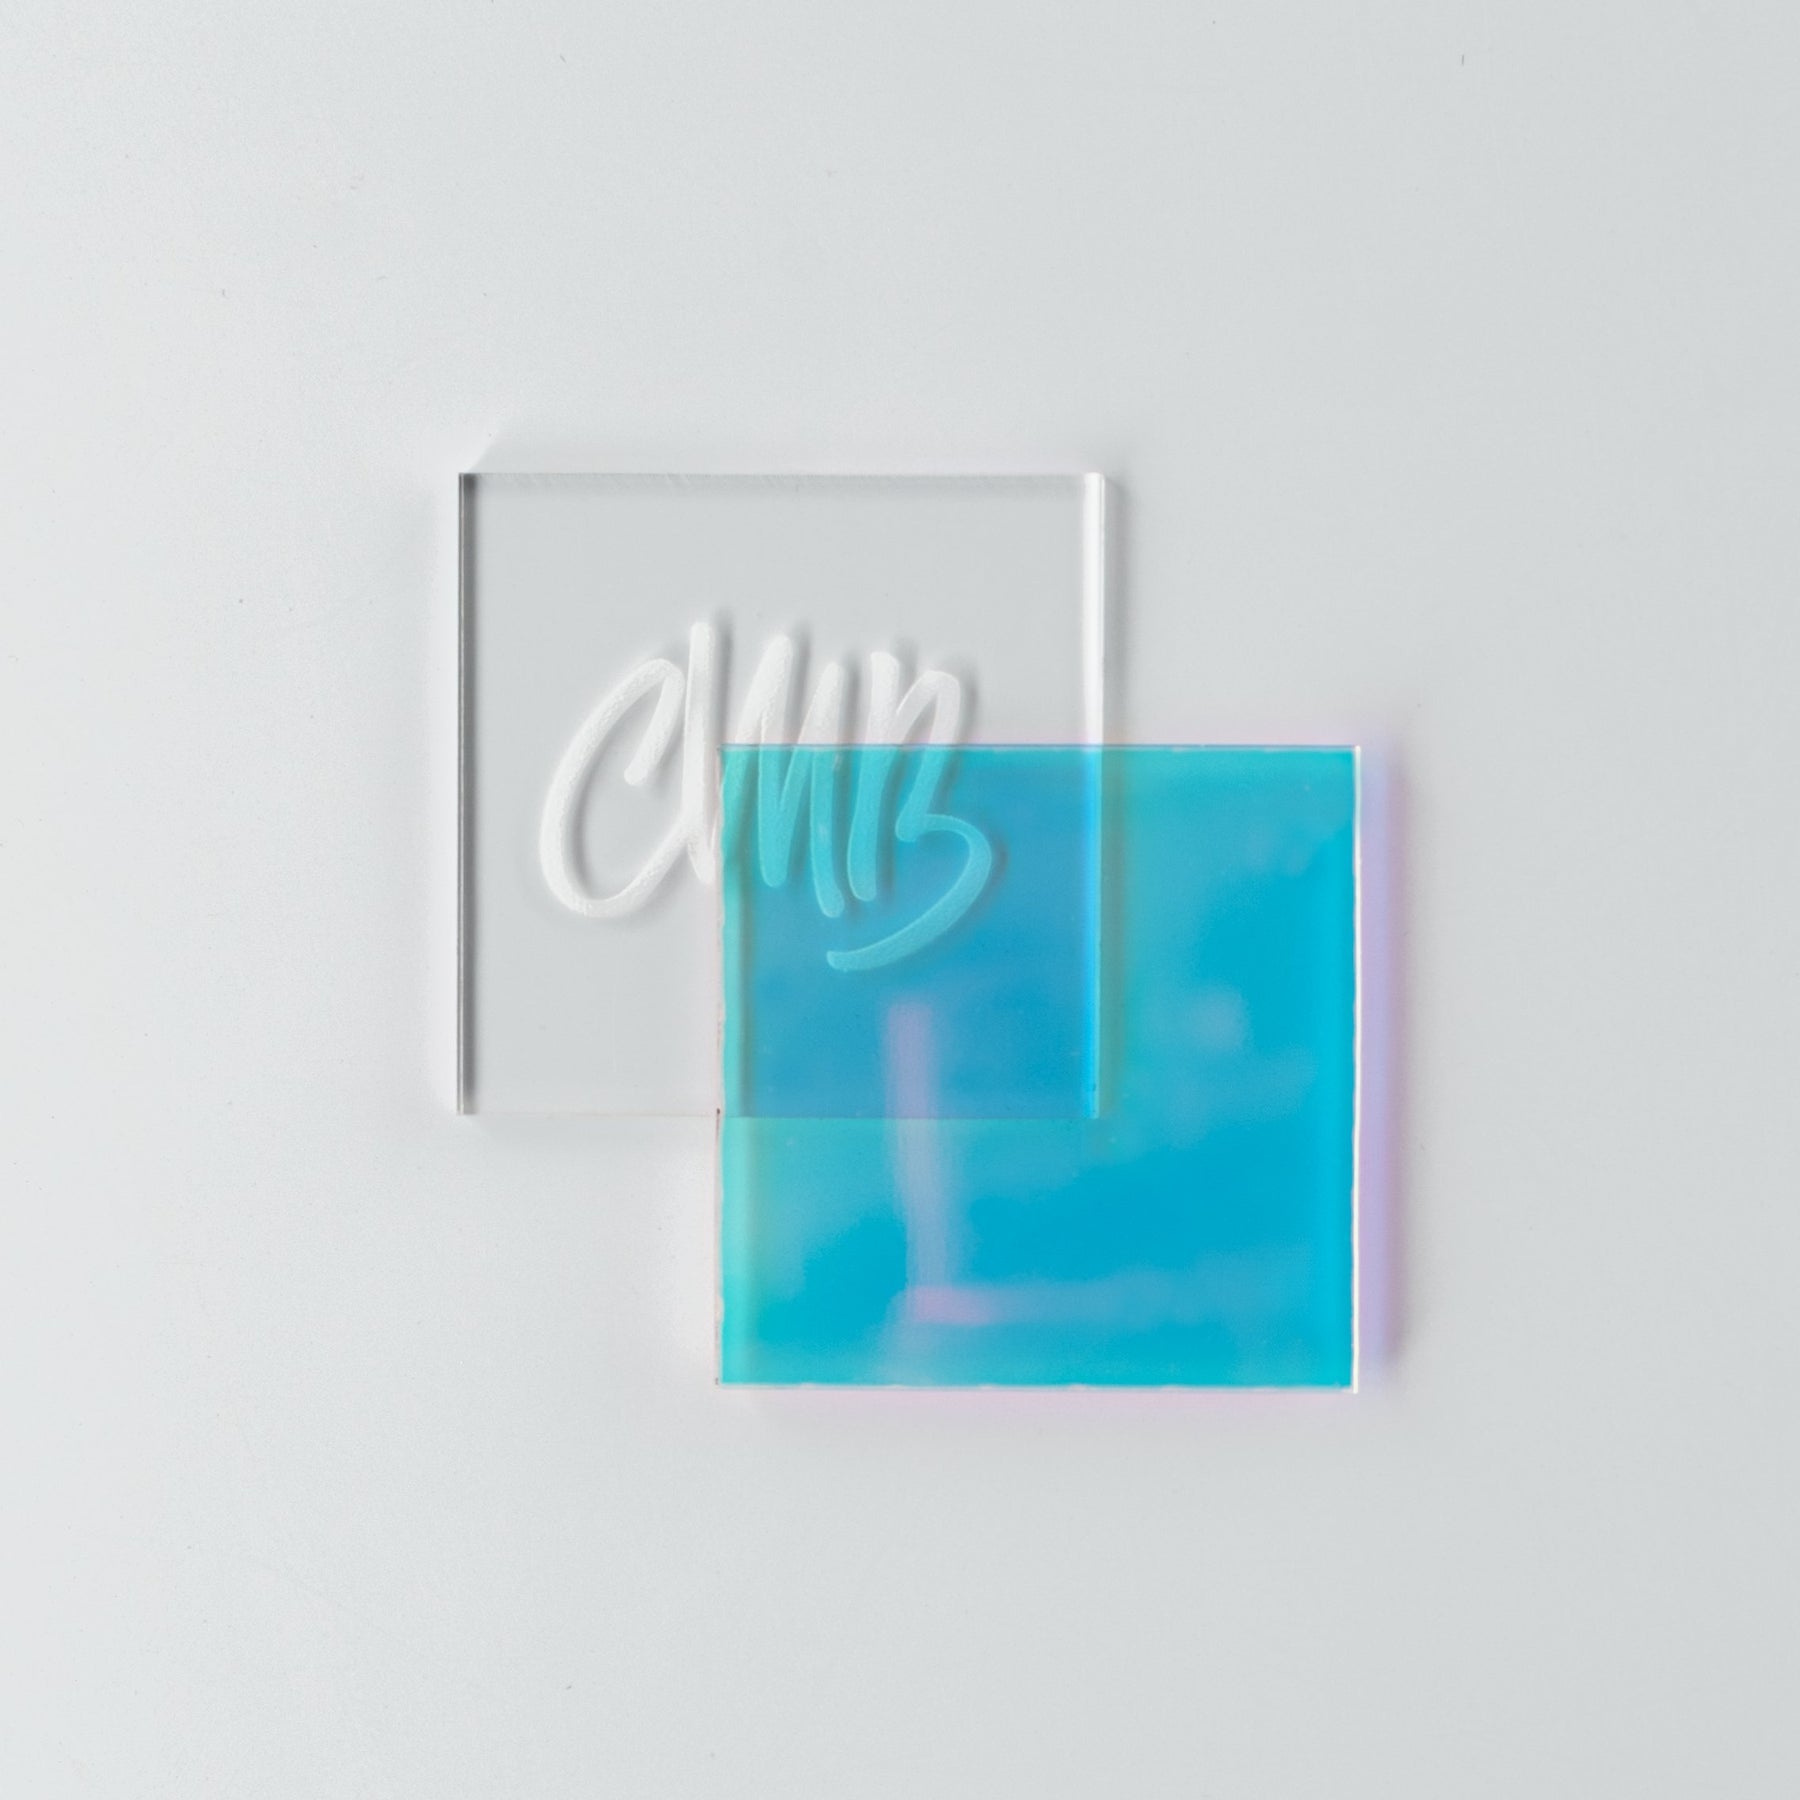 Craft Plastic Mirror  Blue Acrylic Sheet - Mobile